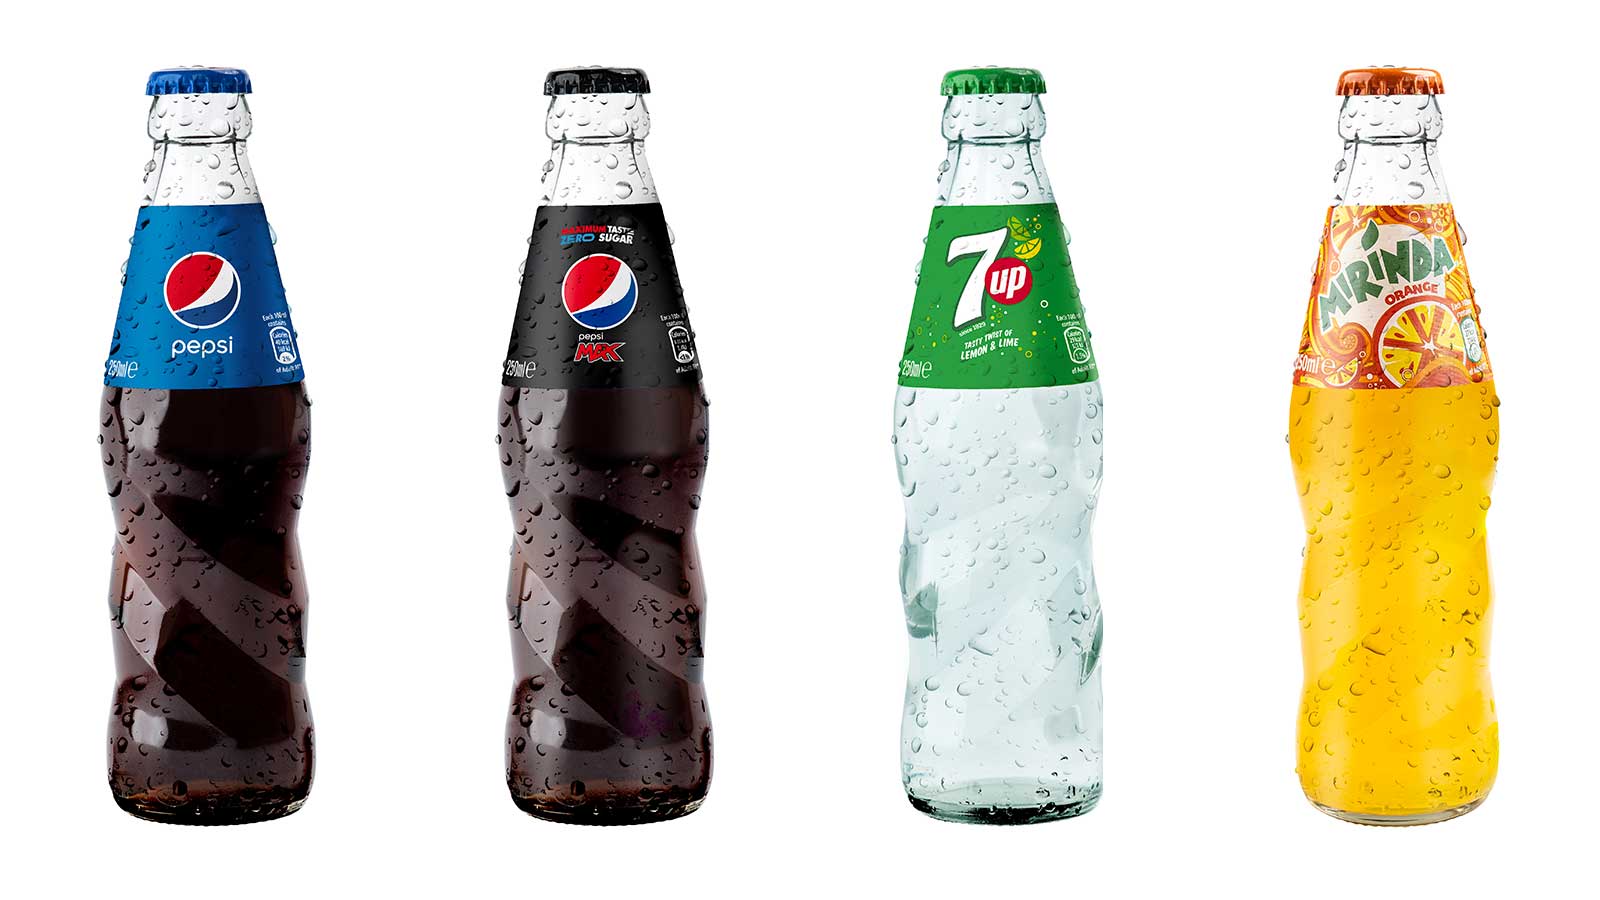 Simonds Farsons rolls out refillable glass bottles for PepsiCo brands